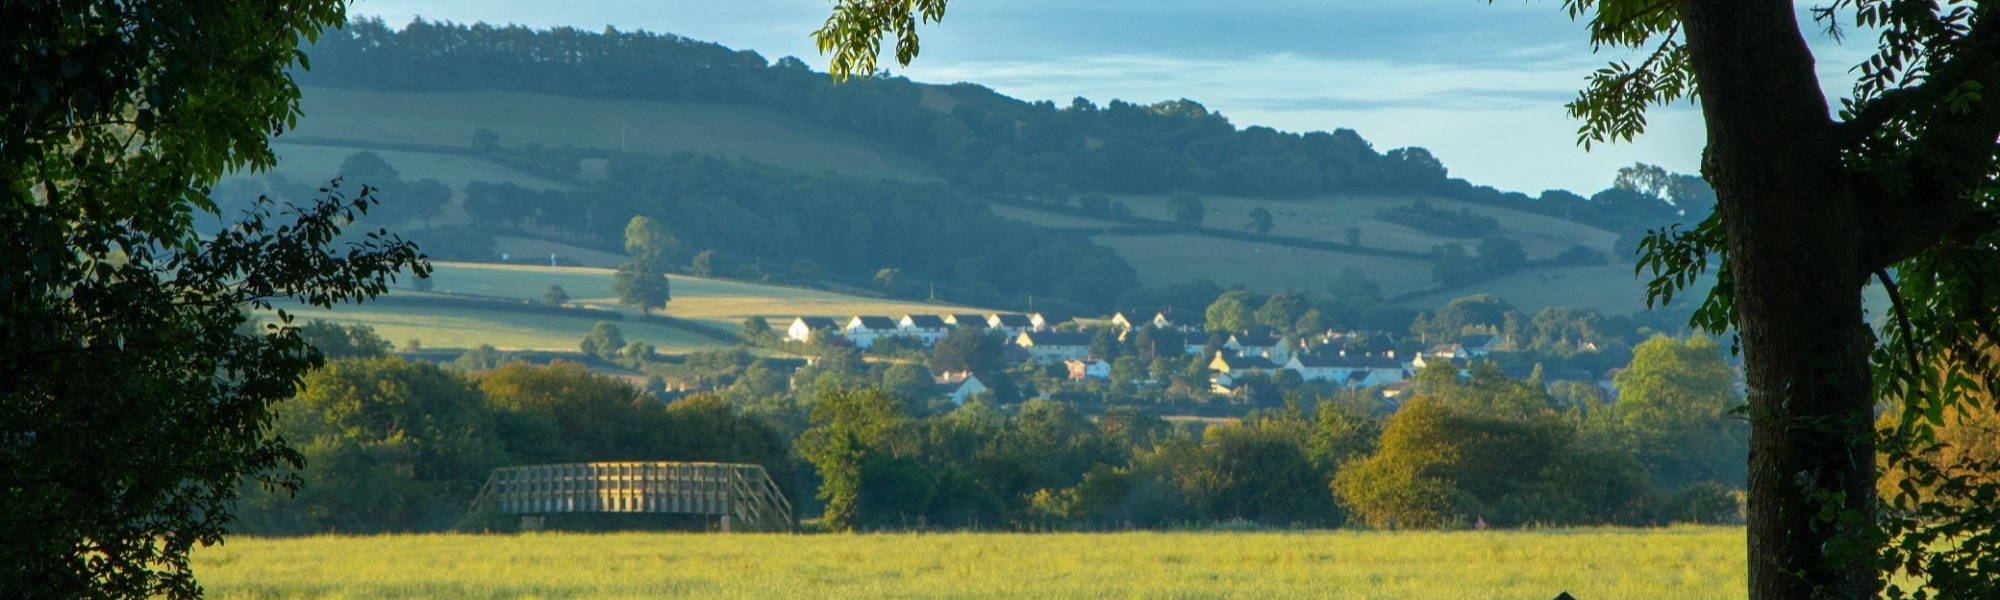 Farmland near town of Axminster in East Devon, UK.